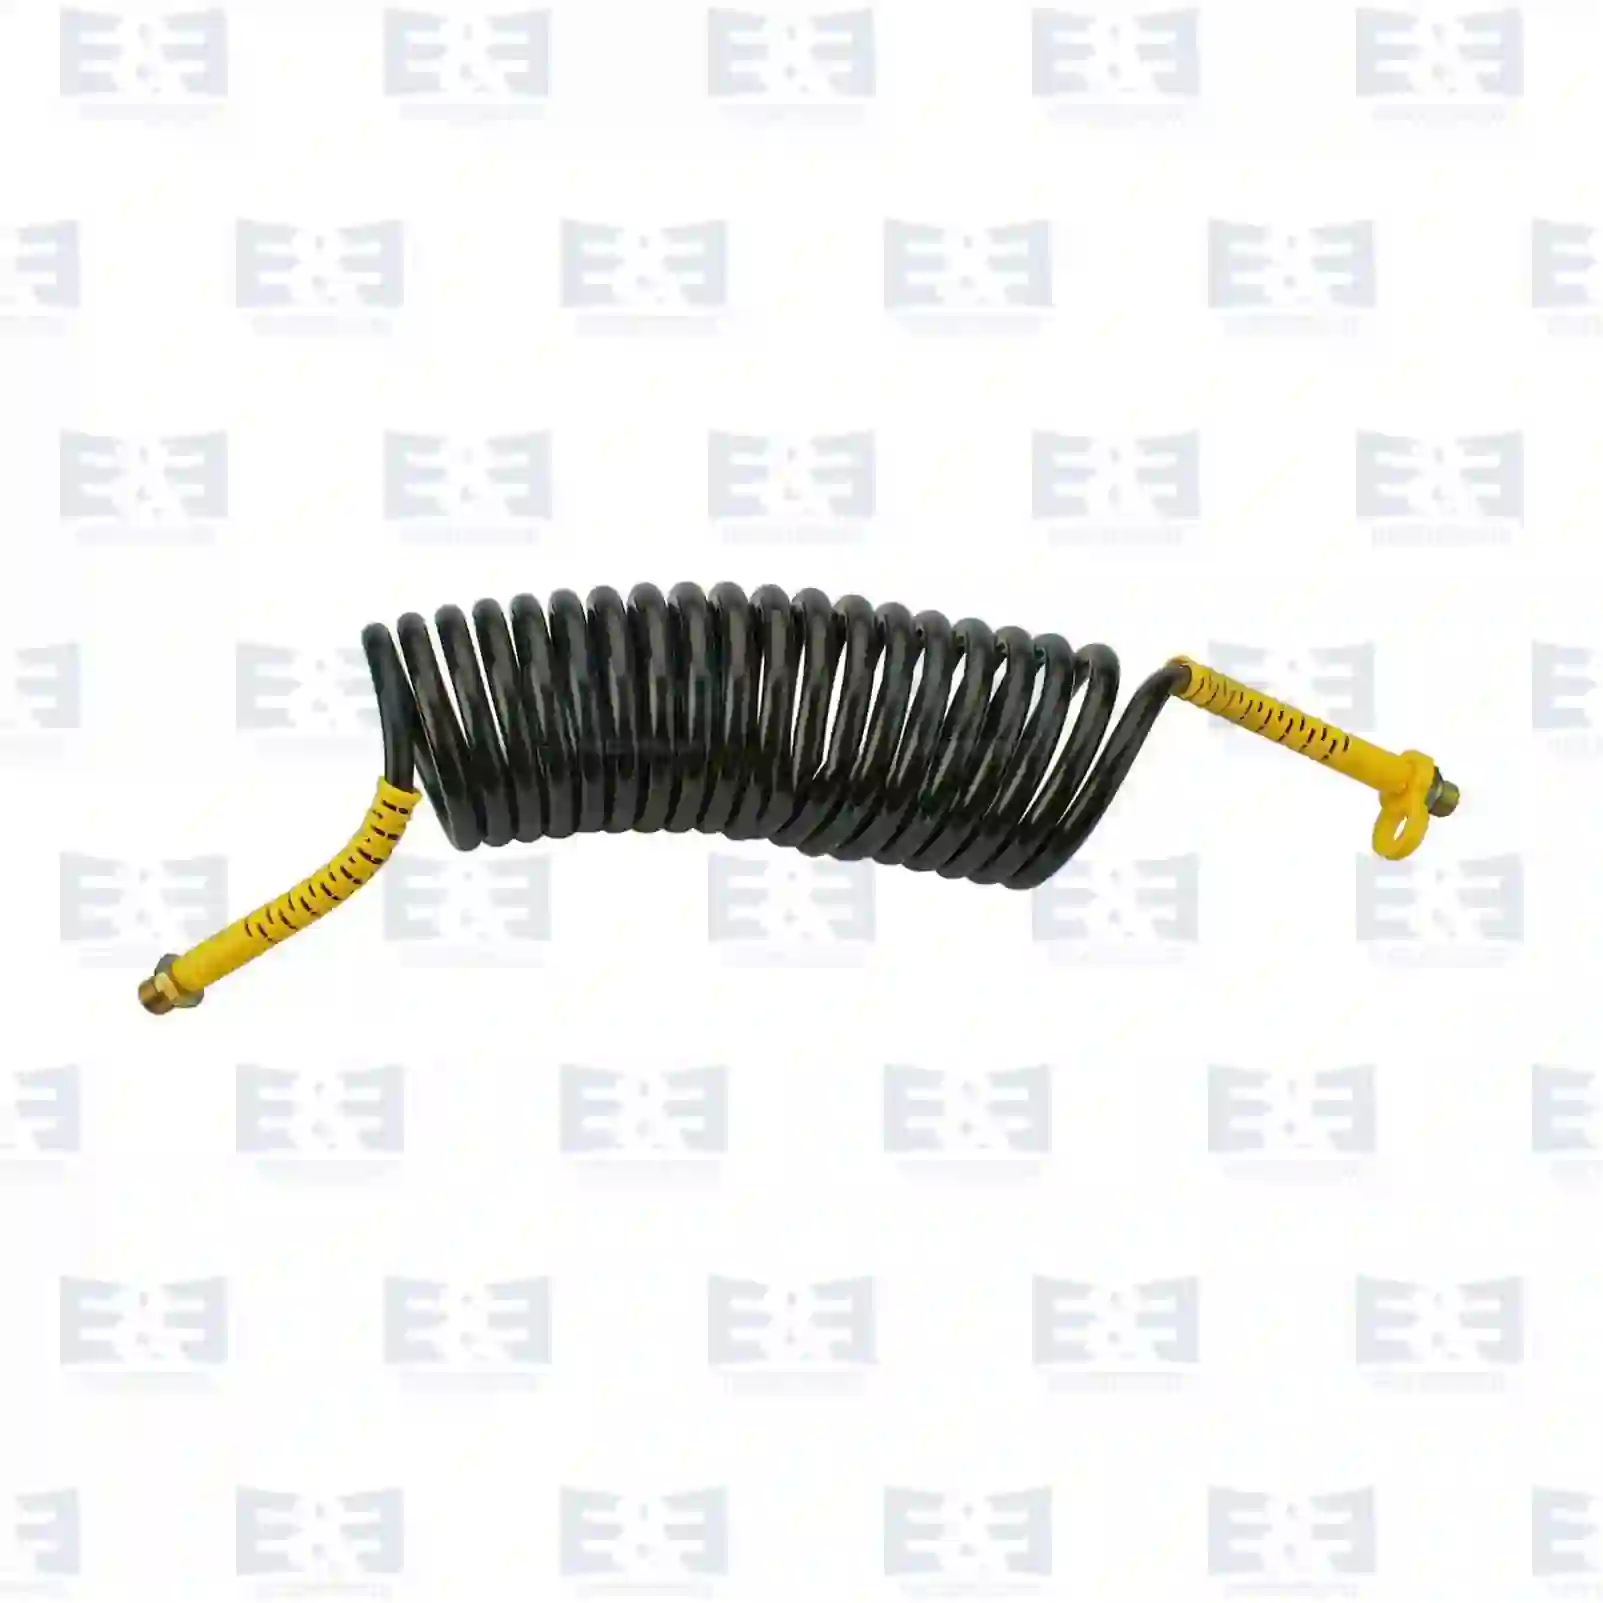  Air spiral || E&E Truck Spare Parts | Truck Spare Parts, Auotomotive Spare Parts